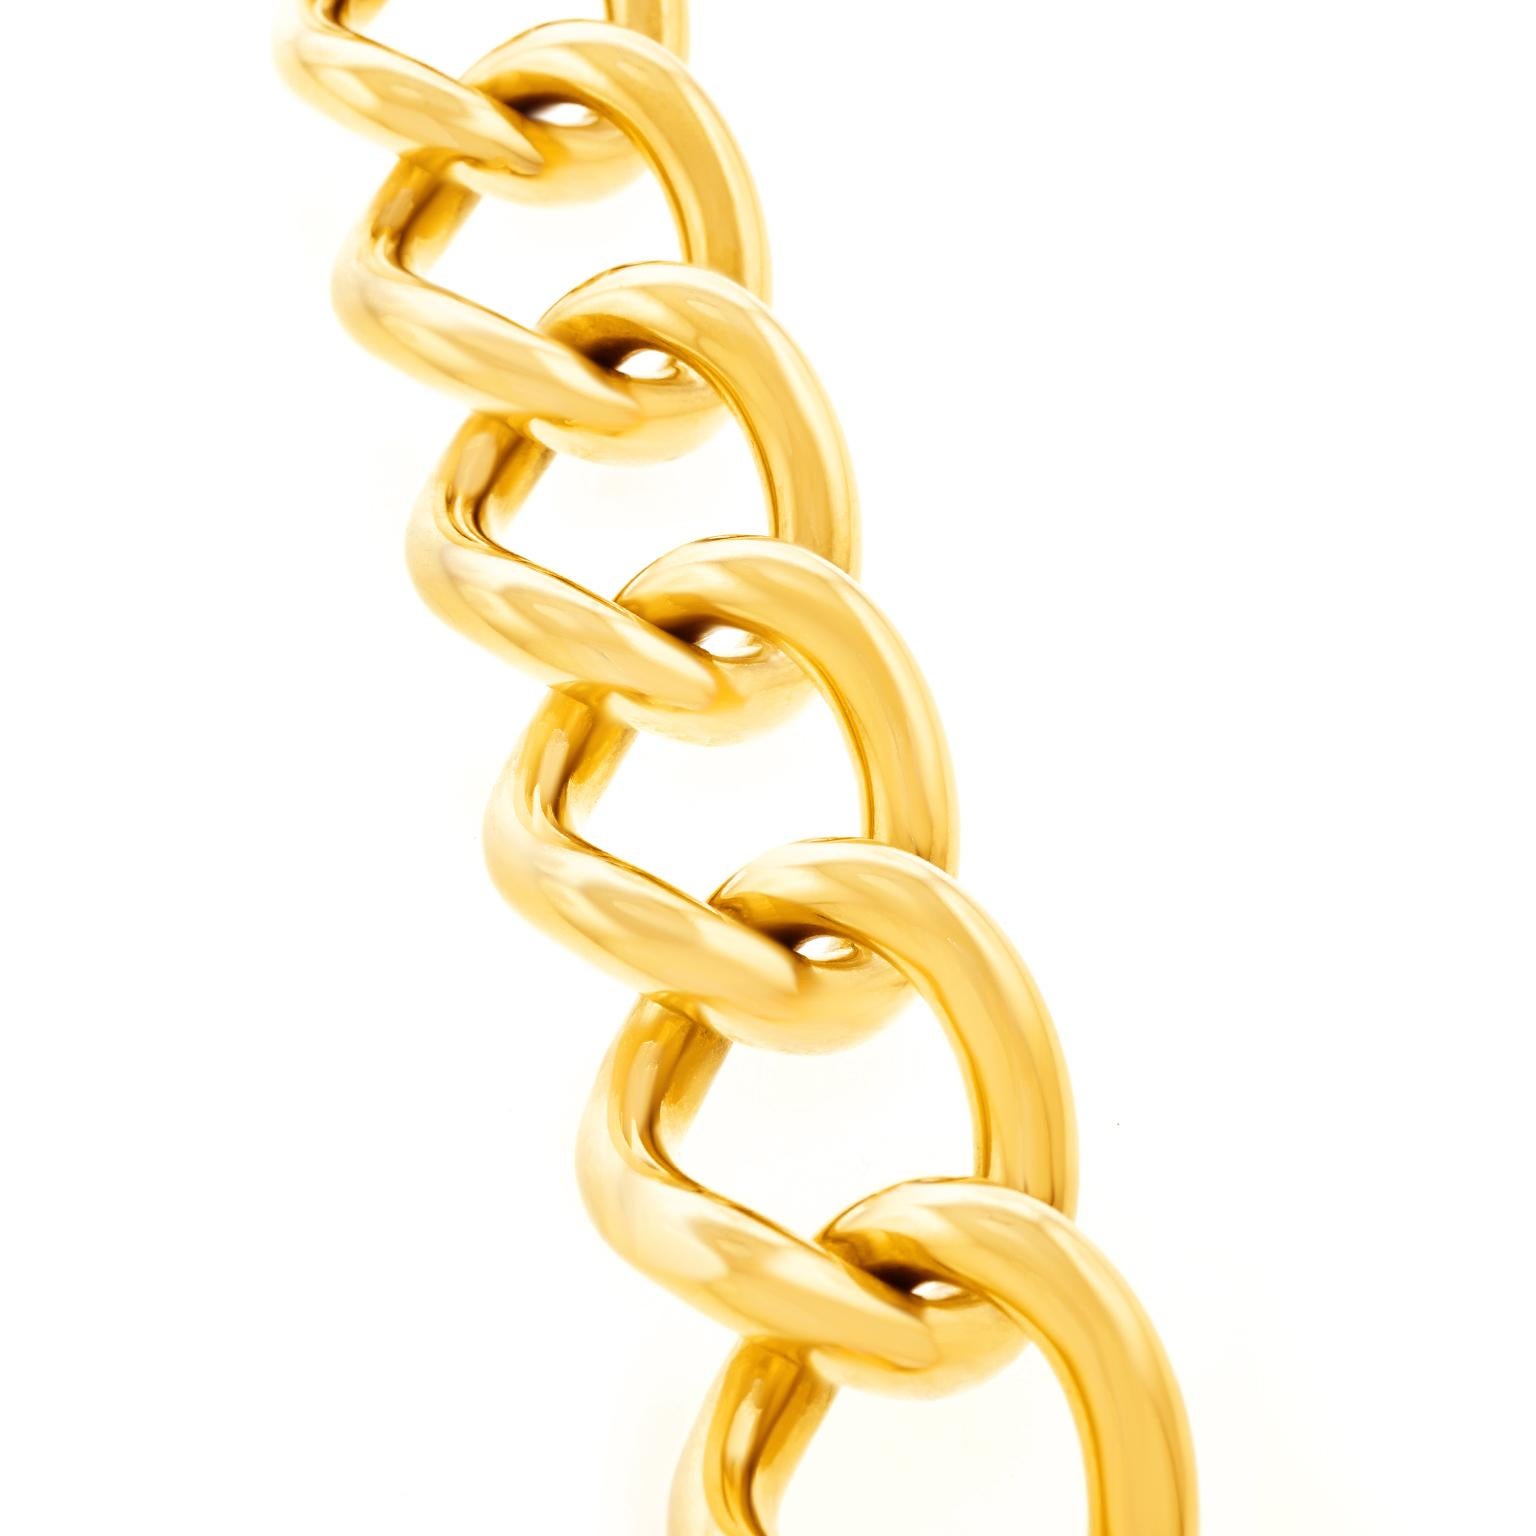 Carl Bucherer Massive Gold Link Bracelet 1